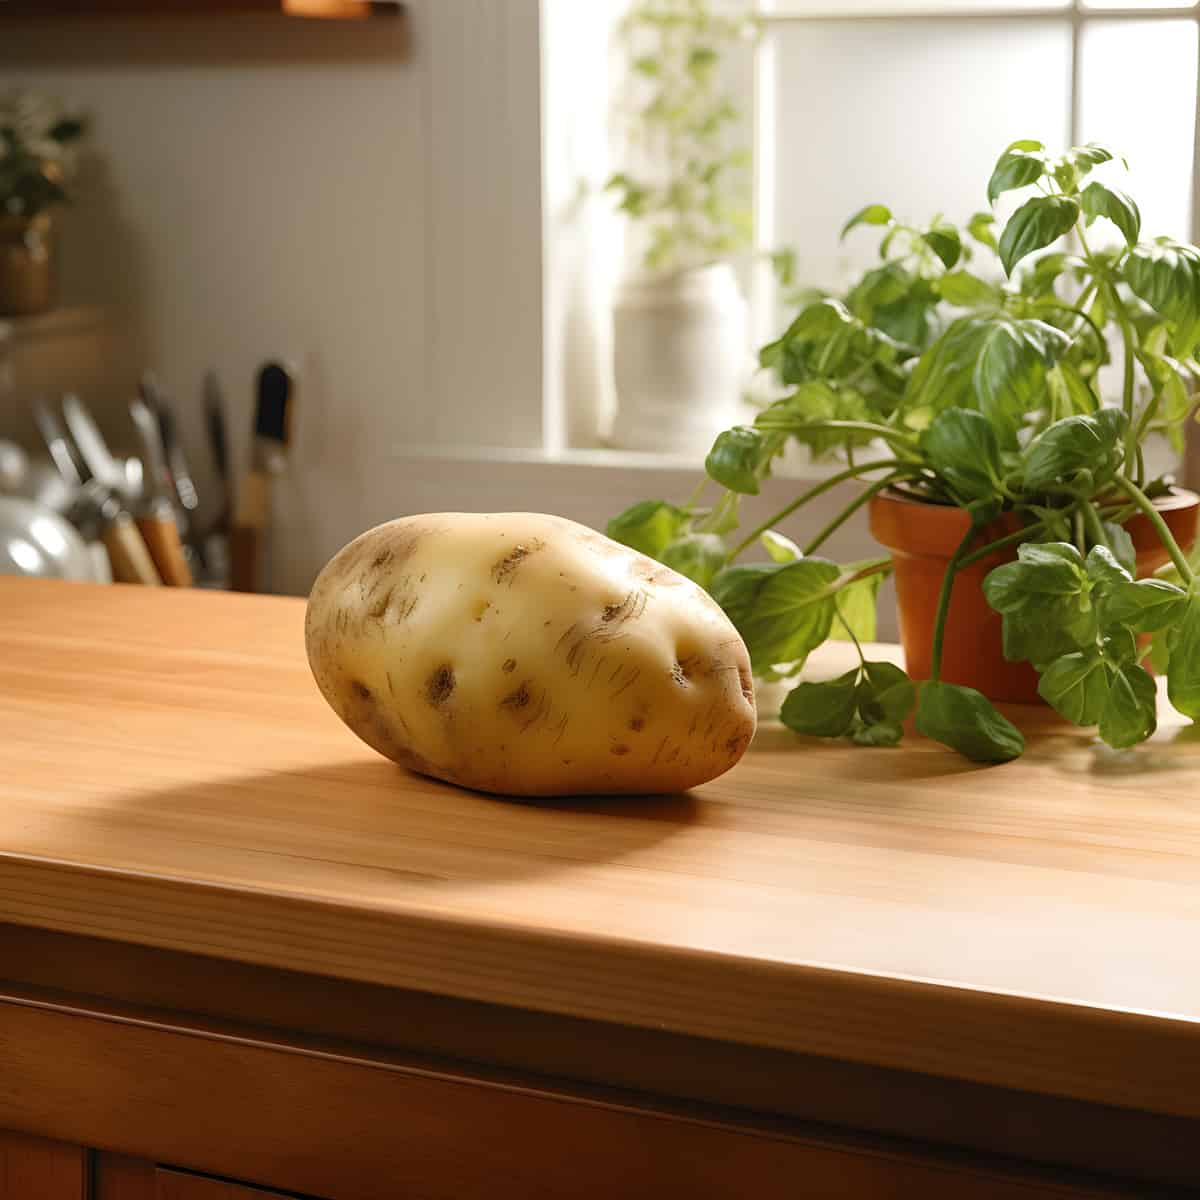 Amflora Potatoes on a kitchen counter